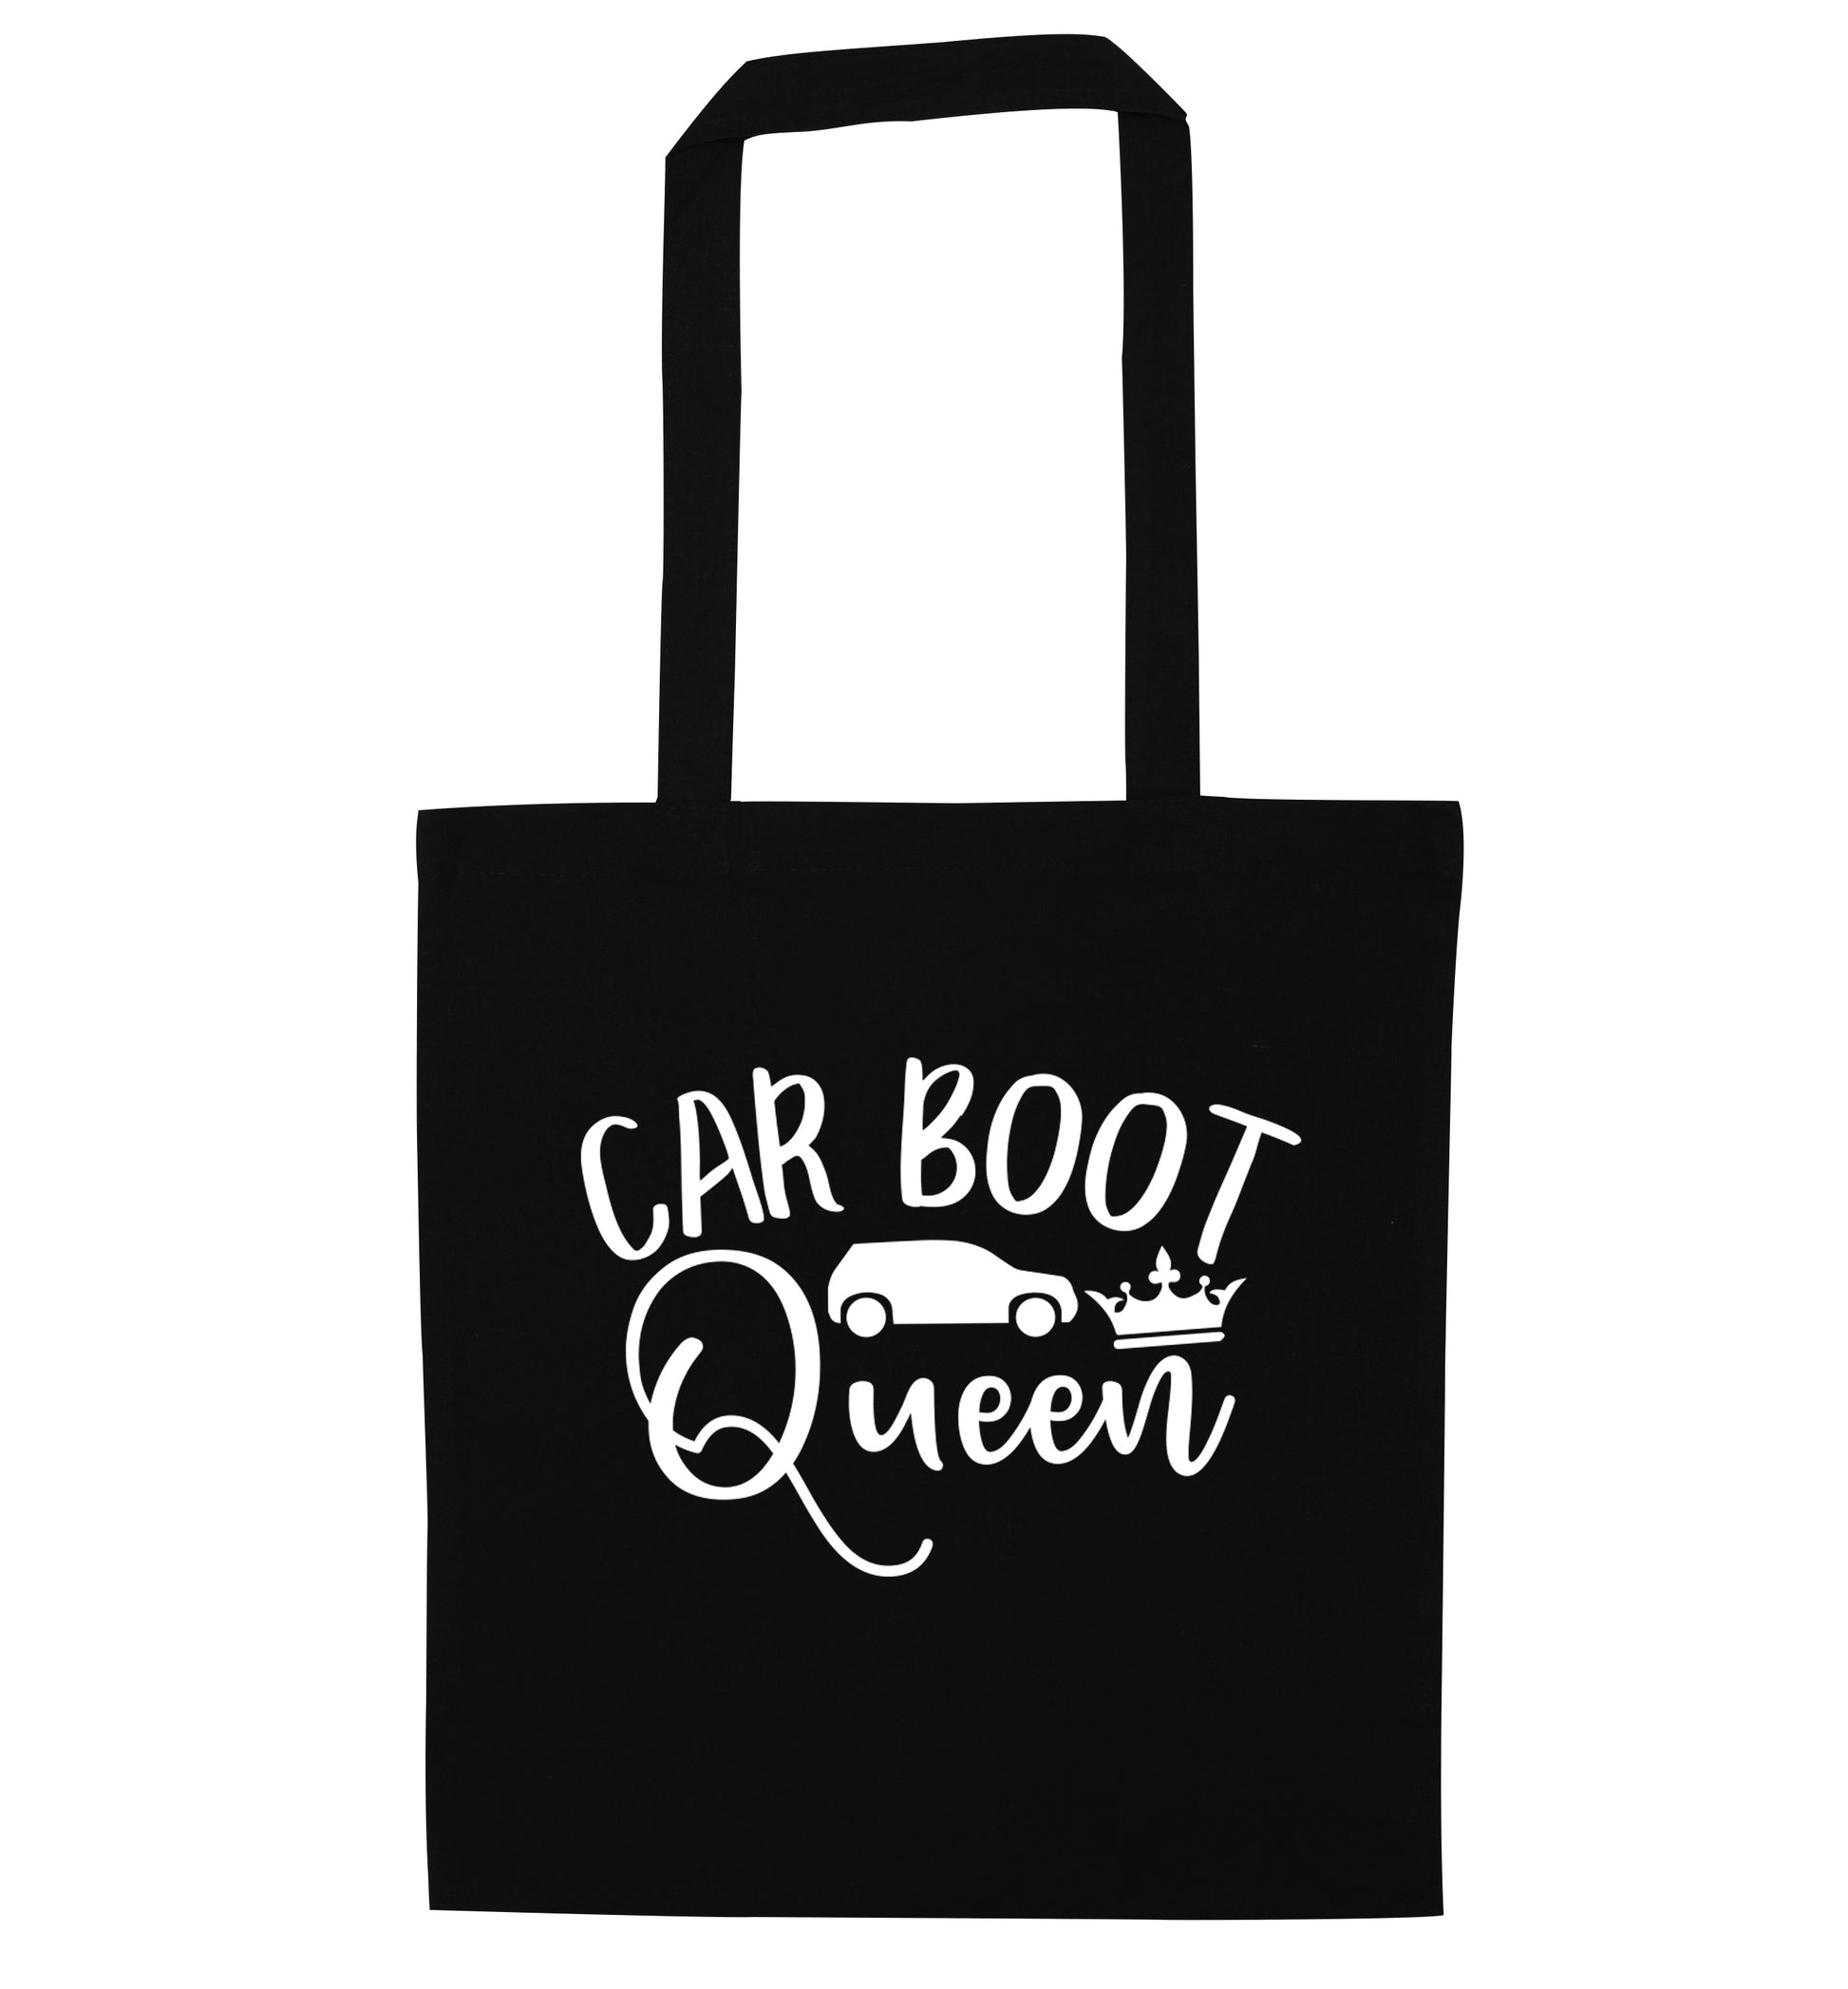 Carboot Queen black tote bag